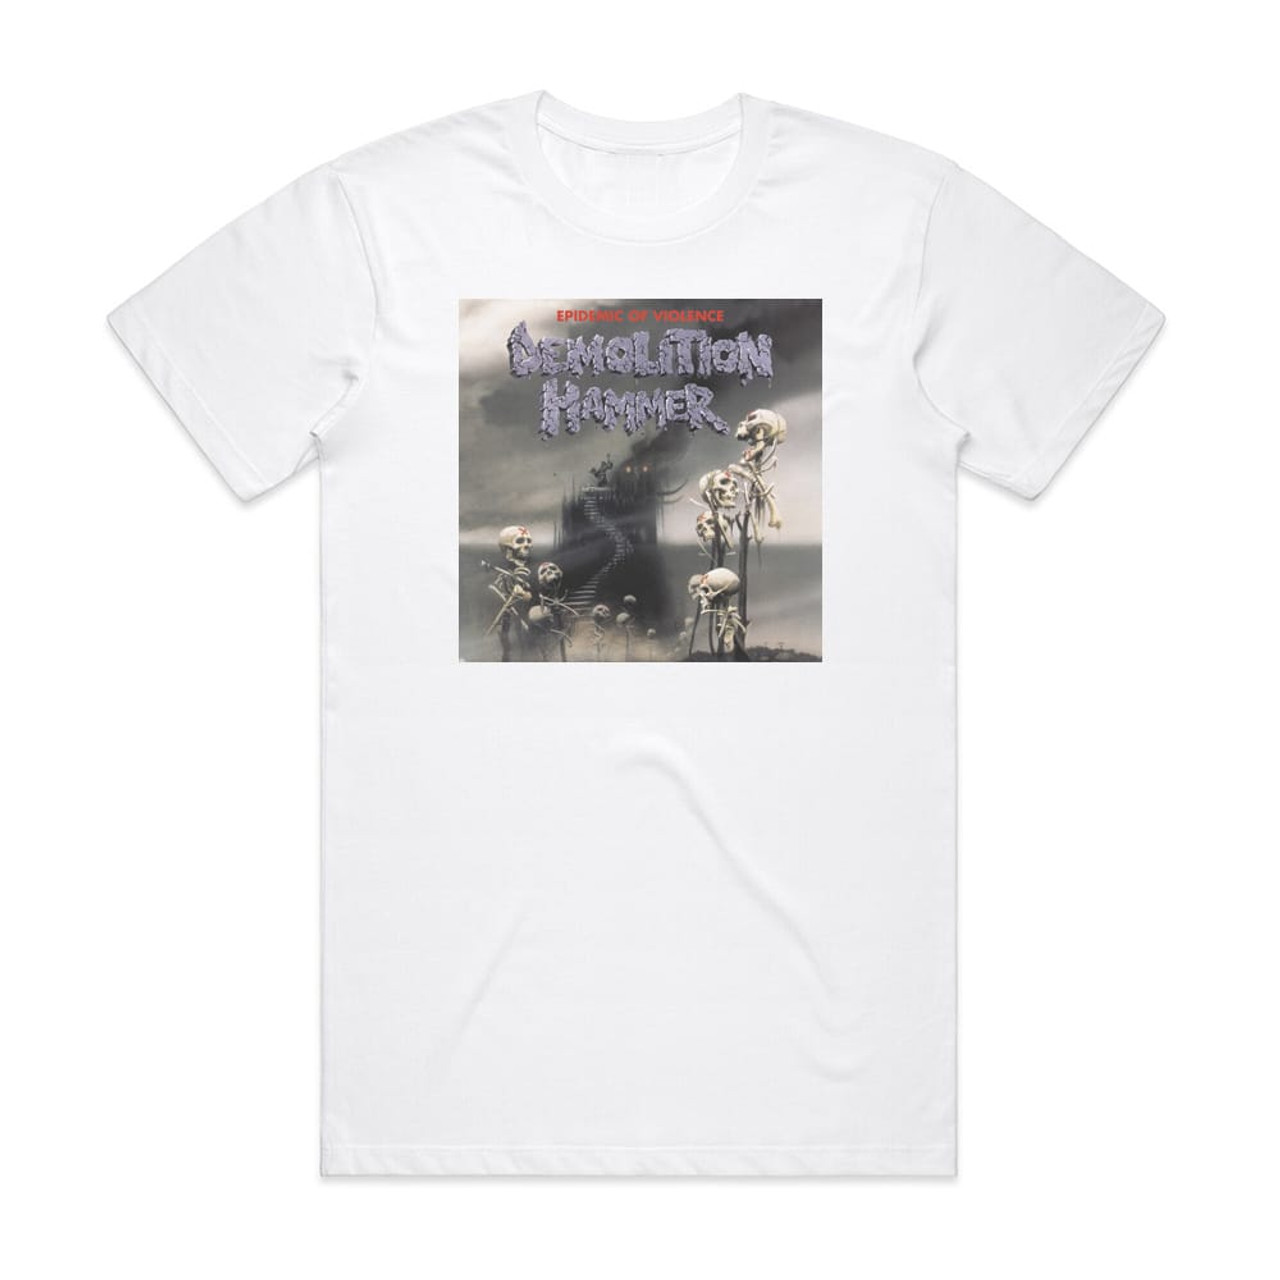 Demolition Hammer Epidemic Of Violence Album Cover T-Shirt White